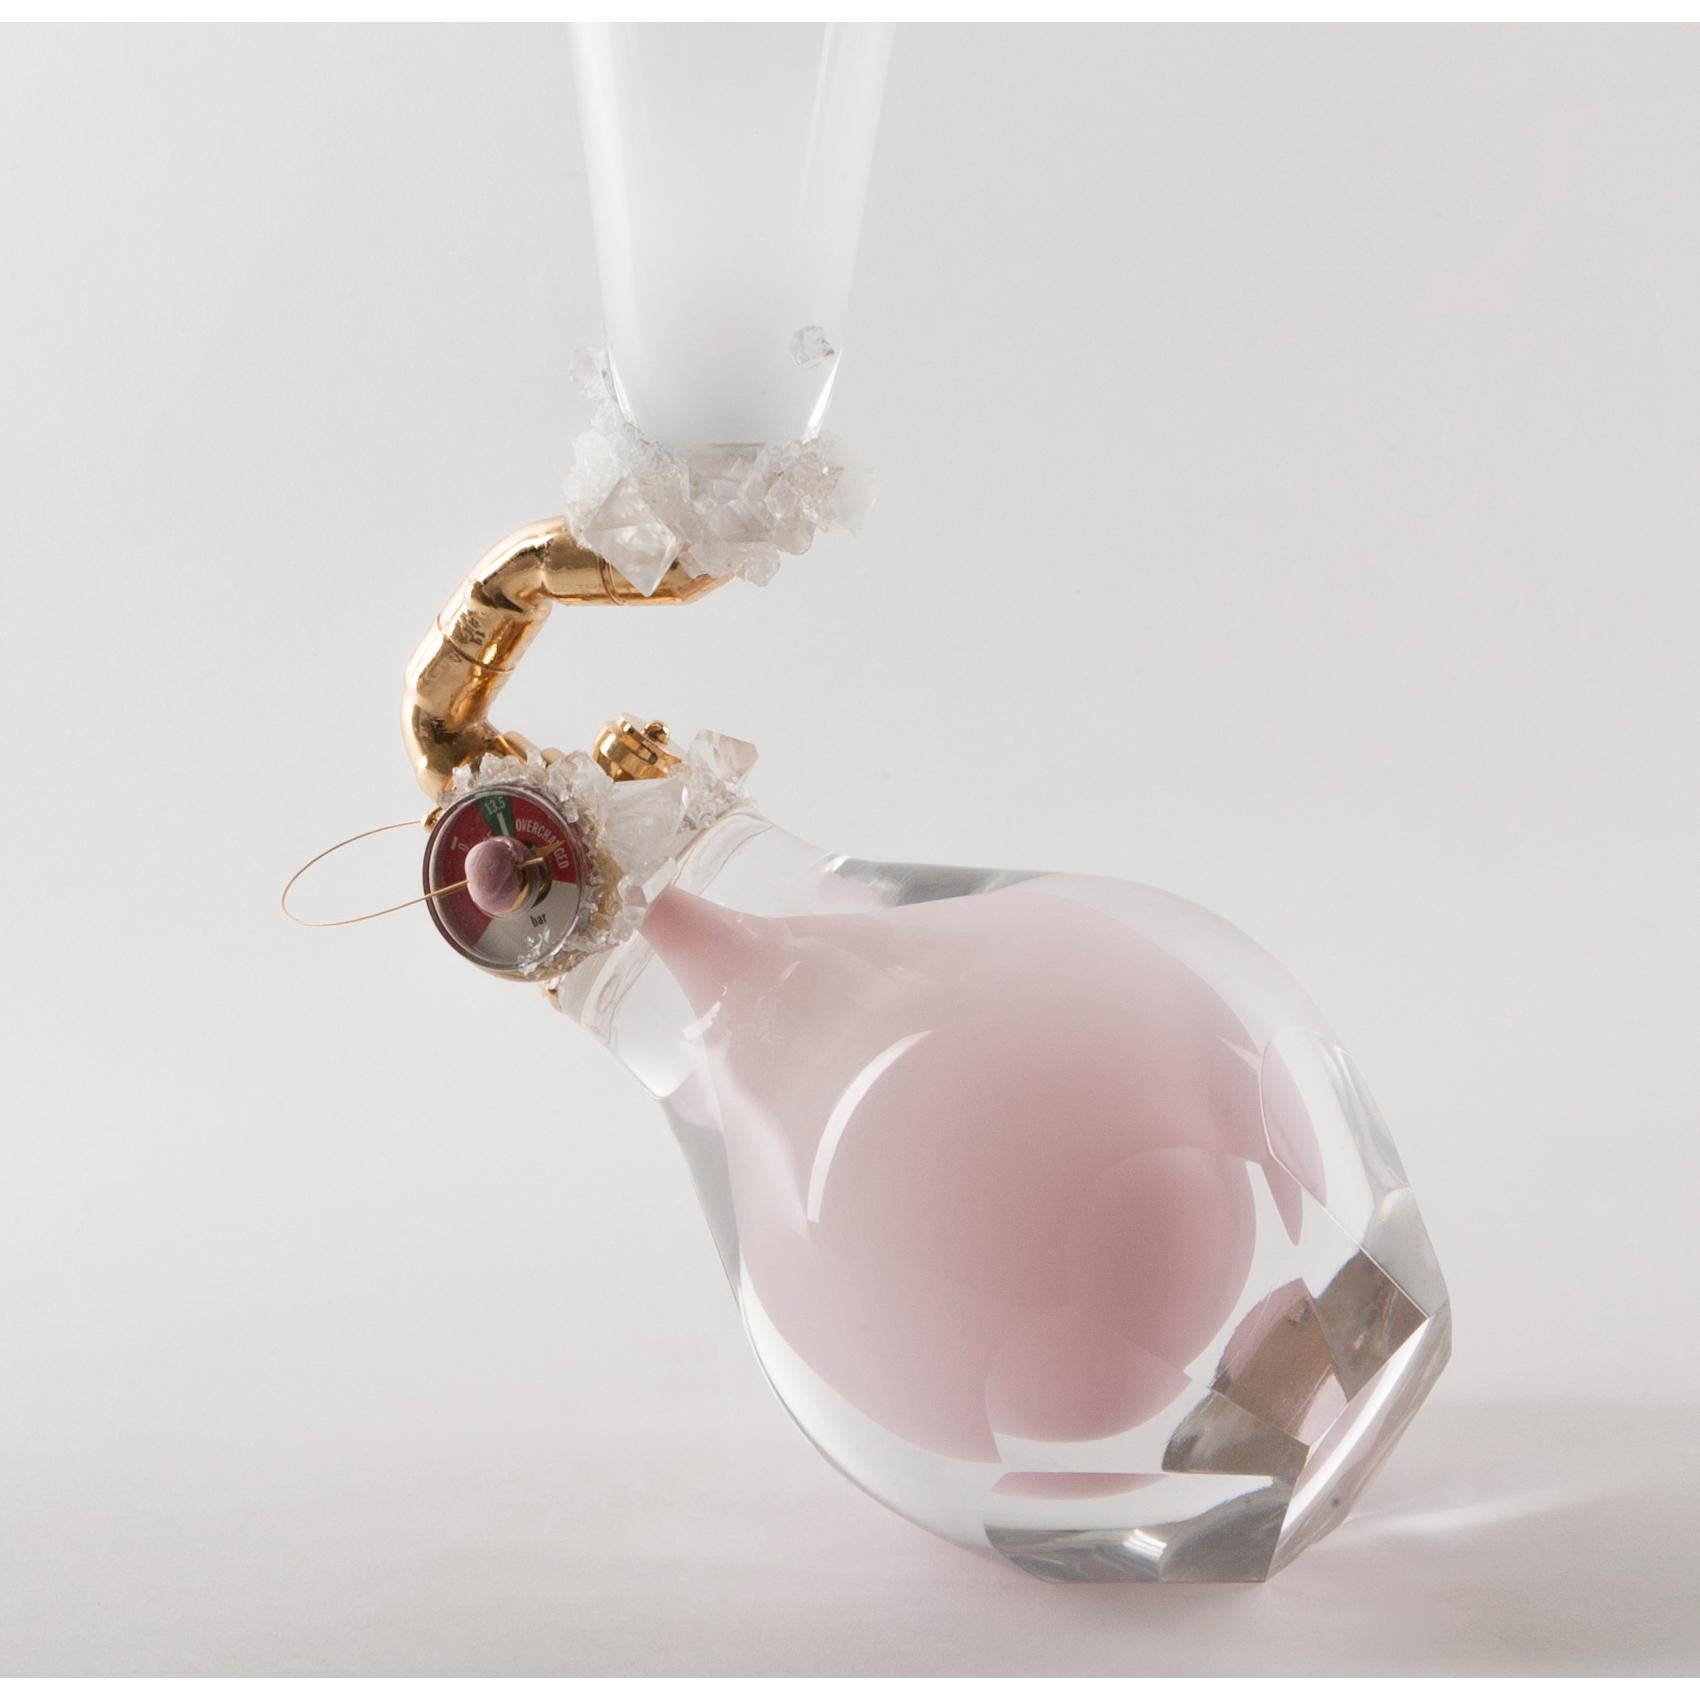 Organic Modern Love Potion, under Pressure by Mark Sturkenboom For Sale